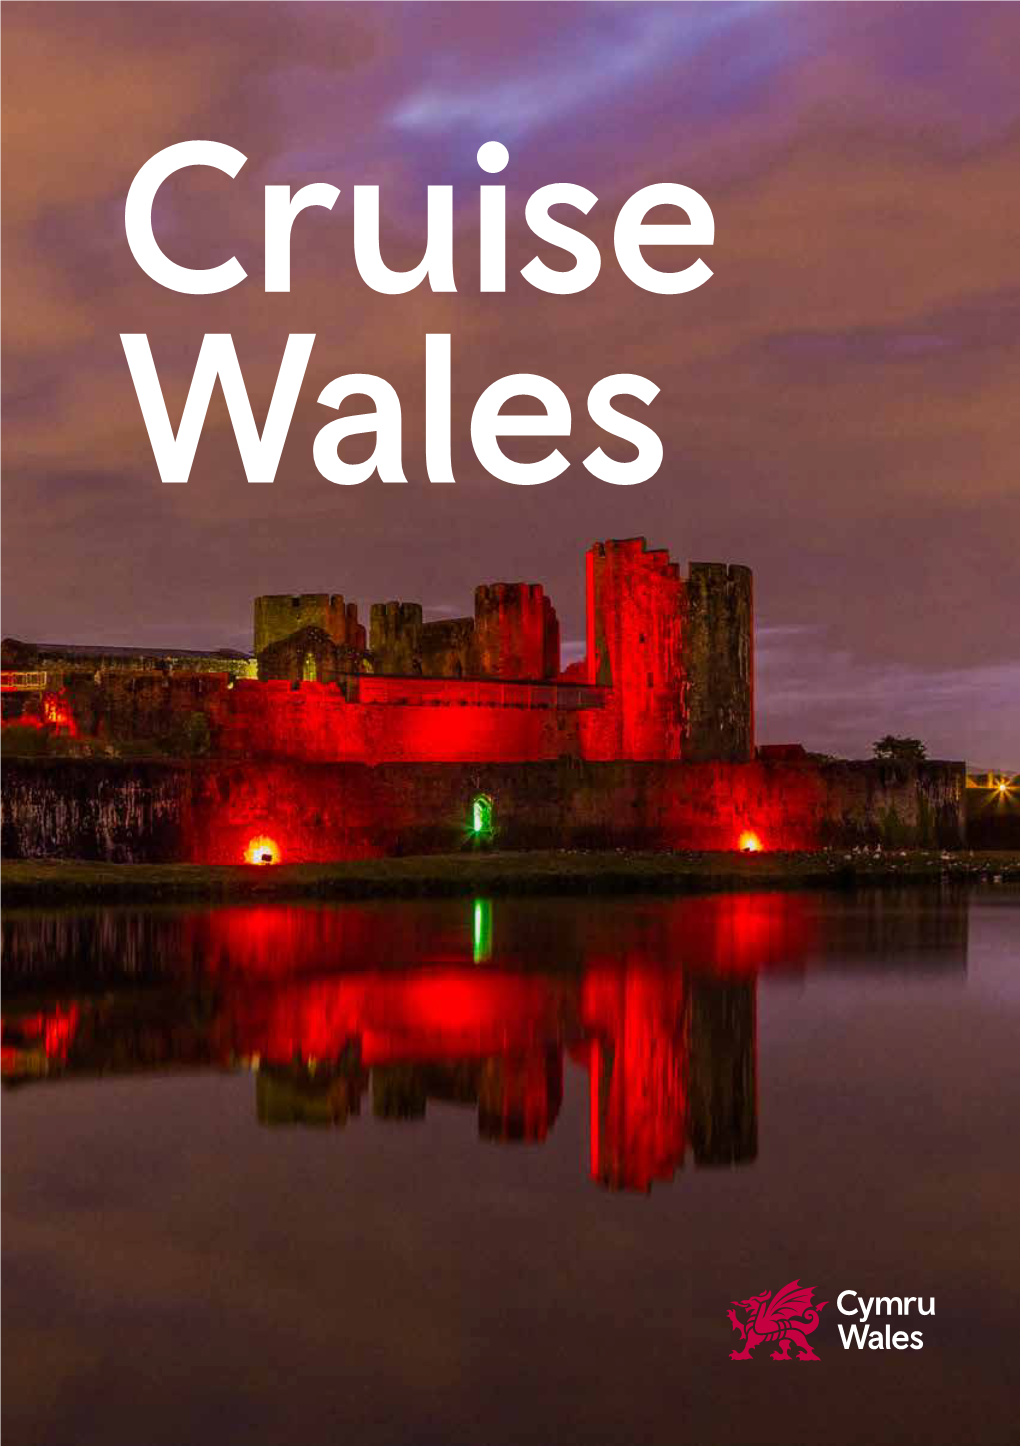 Cruise Wales Brochure